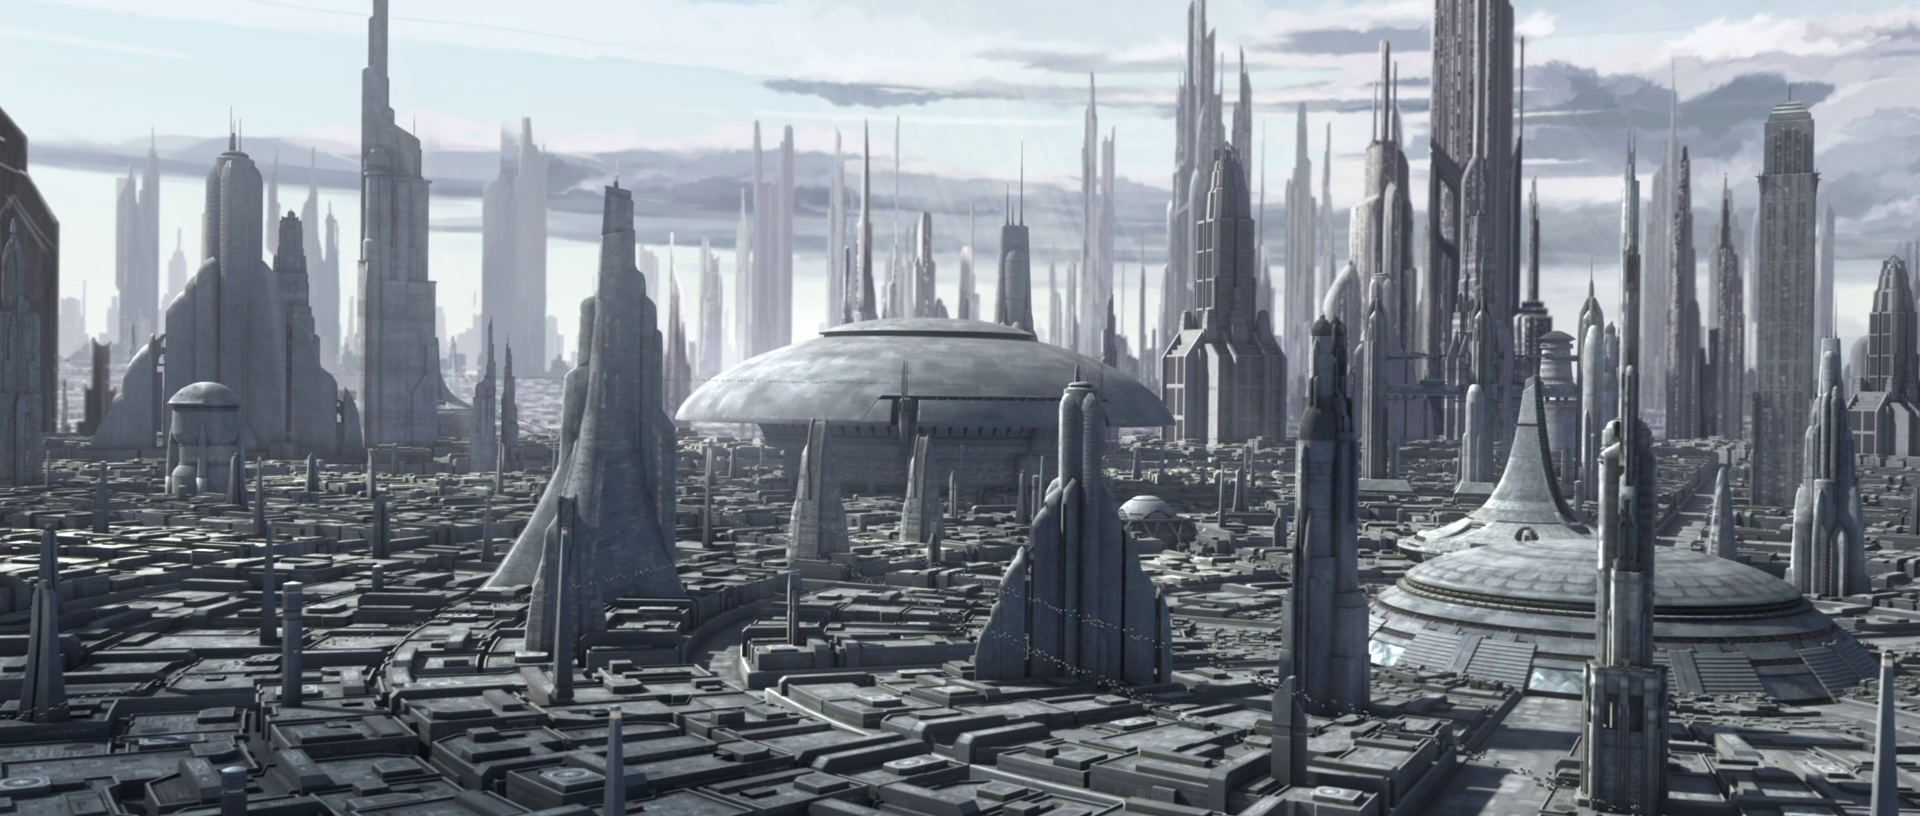 Galactic Empire (Star Wars) - Wikipedia